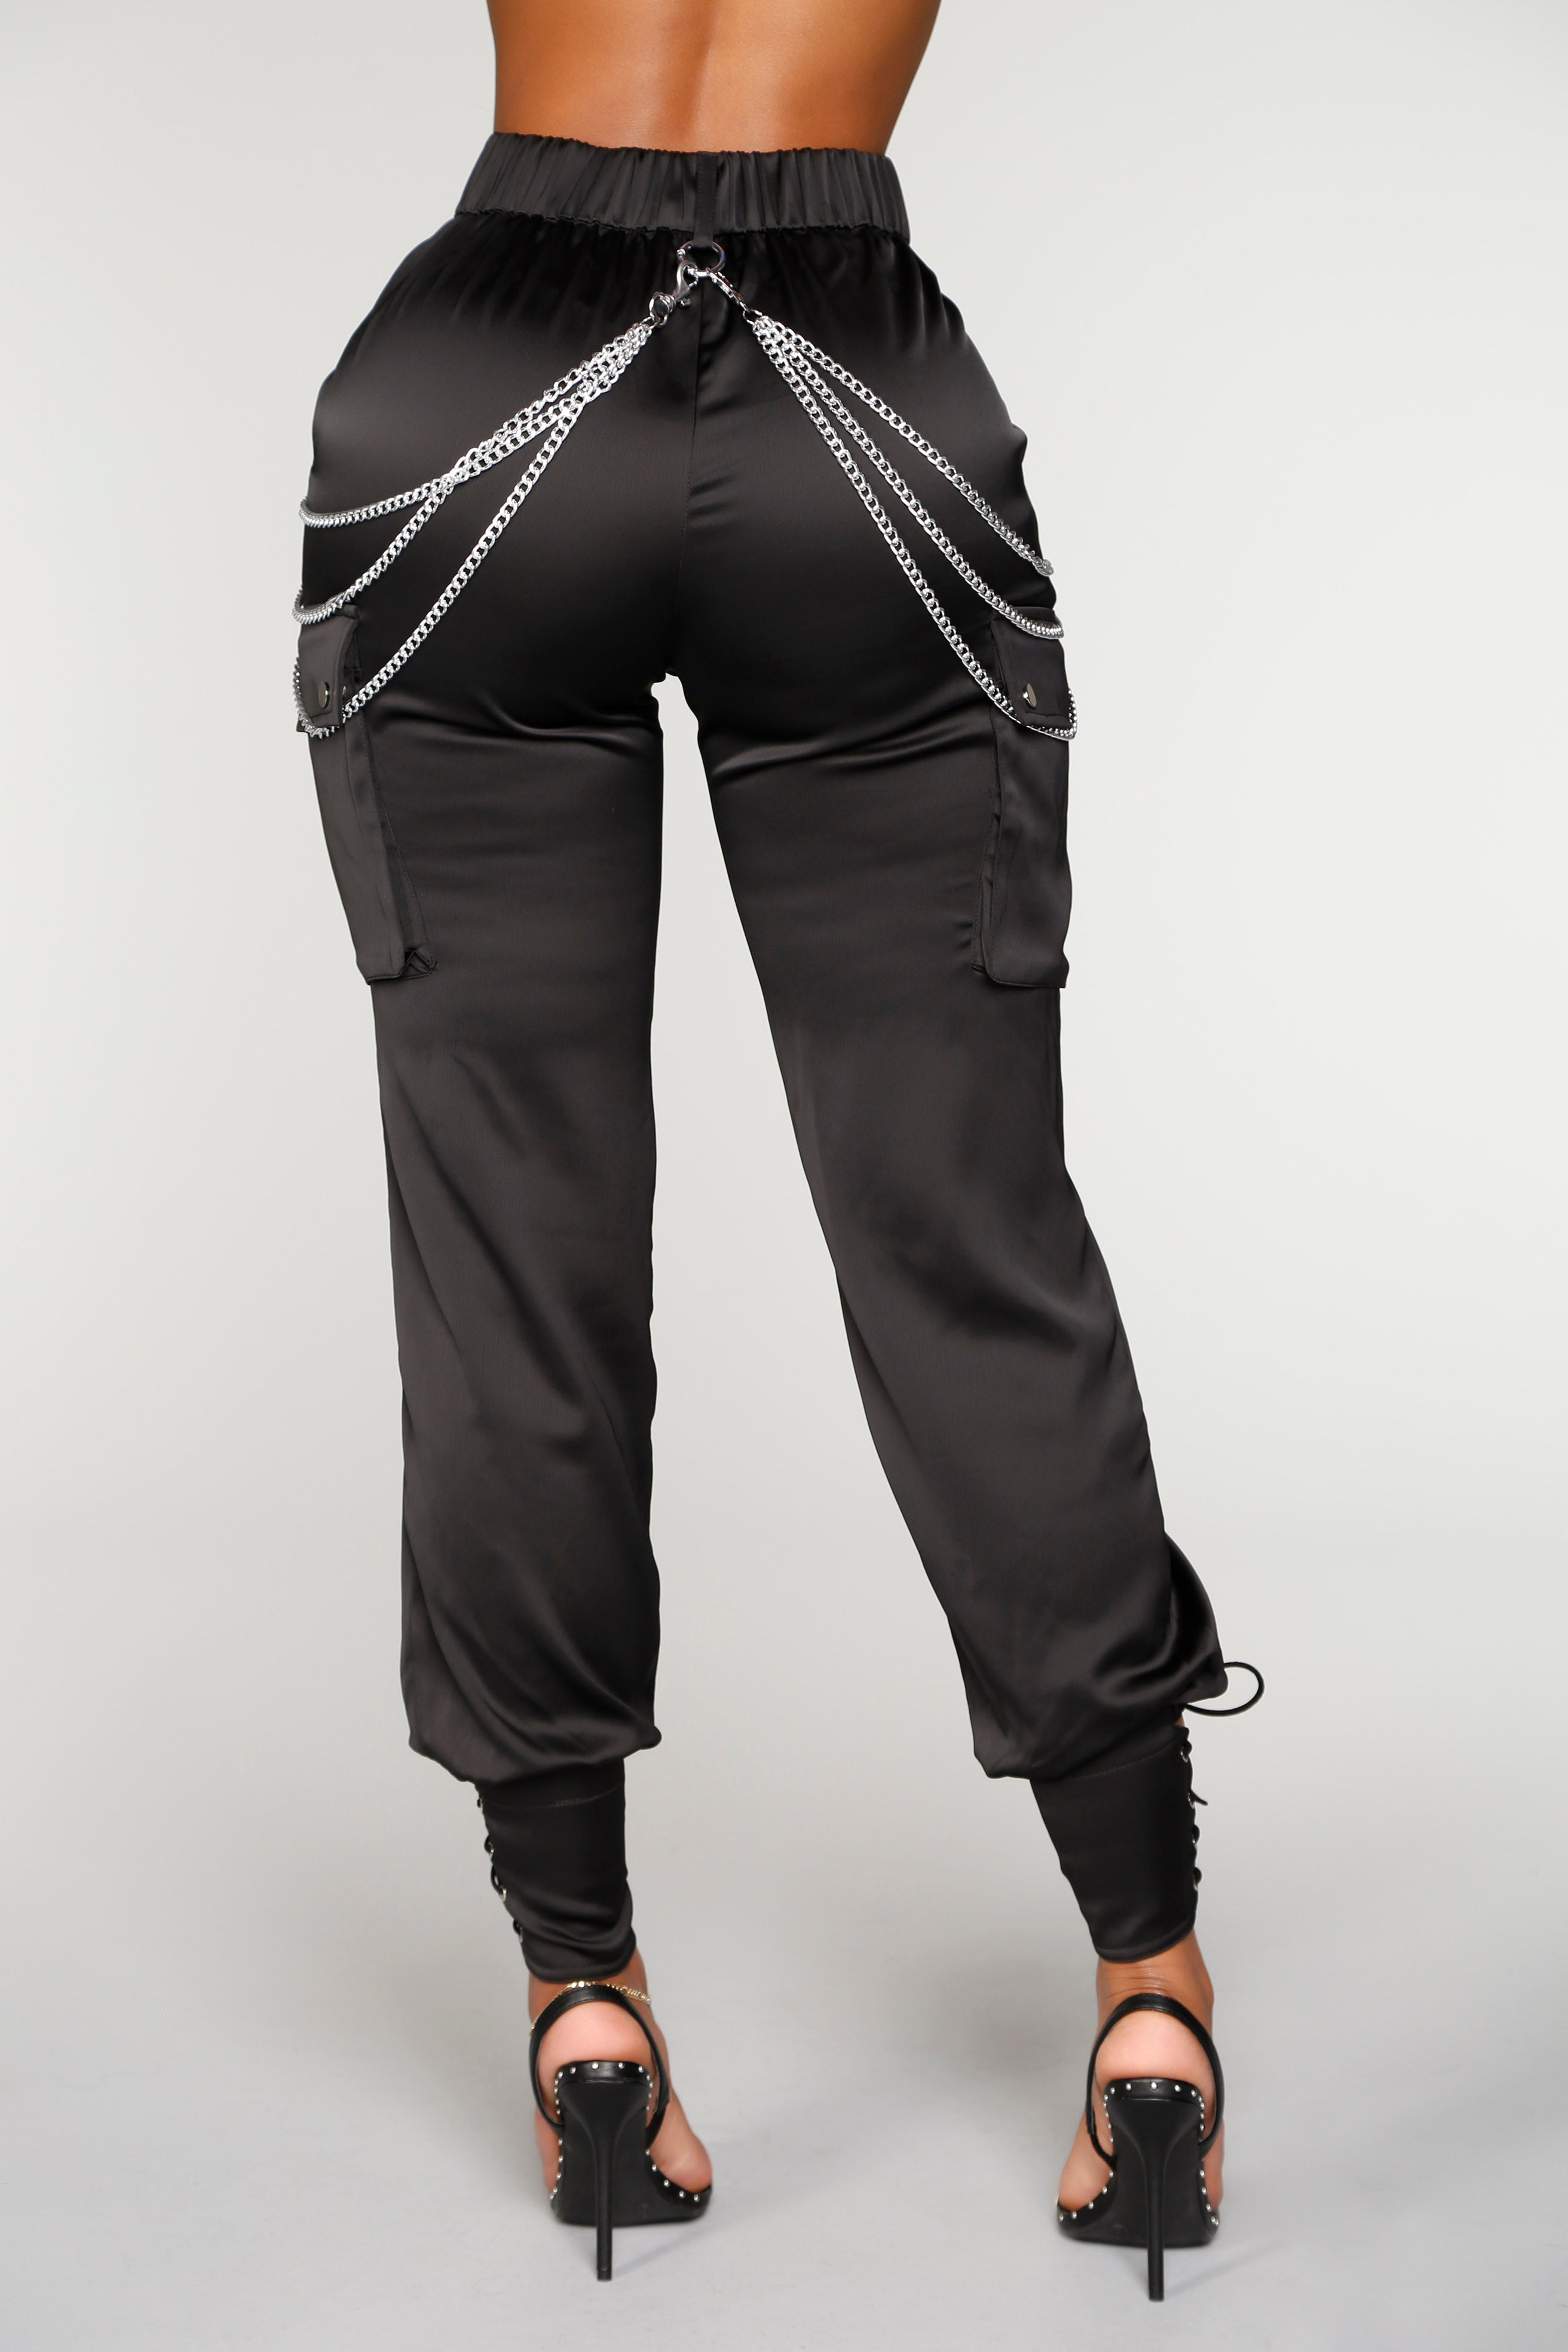 Chain Chain Chain Cargo Pants - Black – Fashion Nova